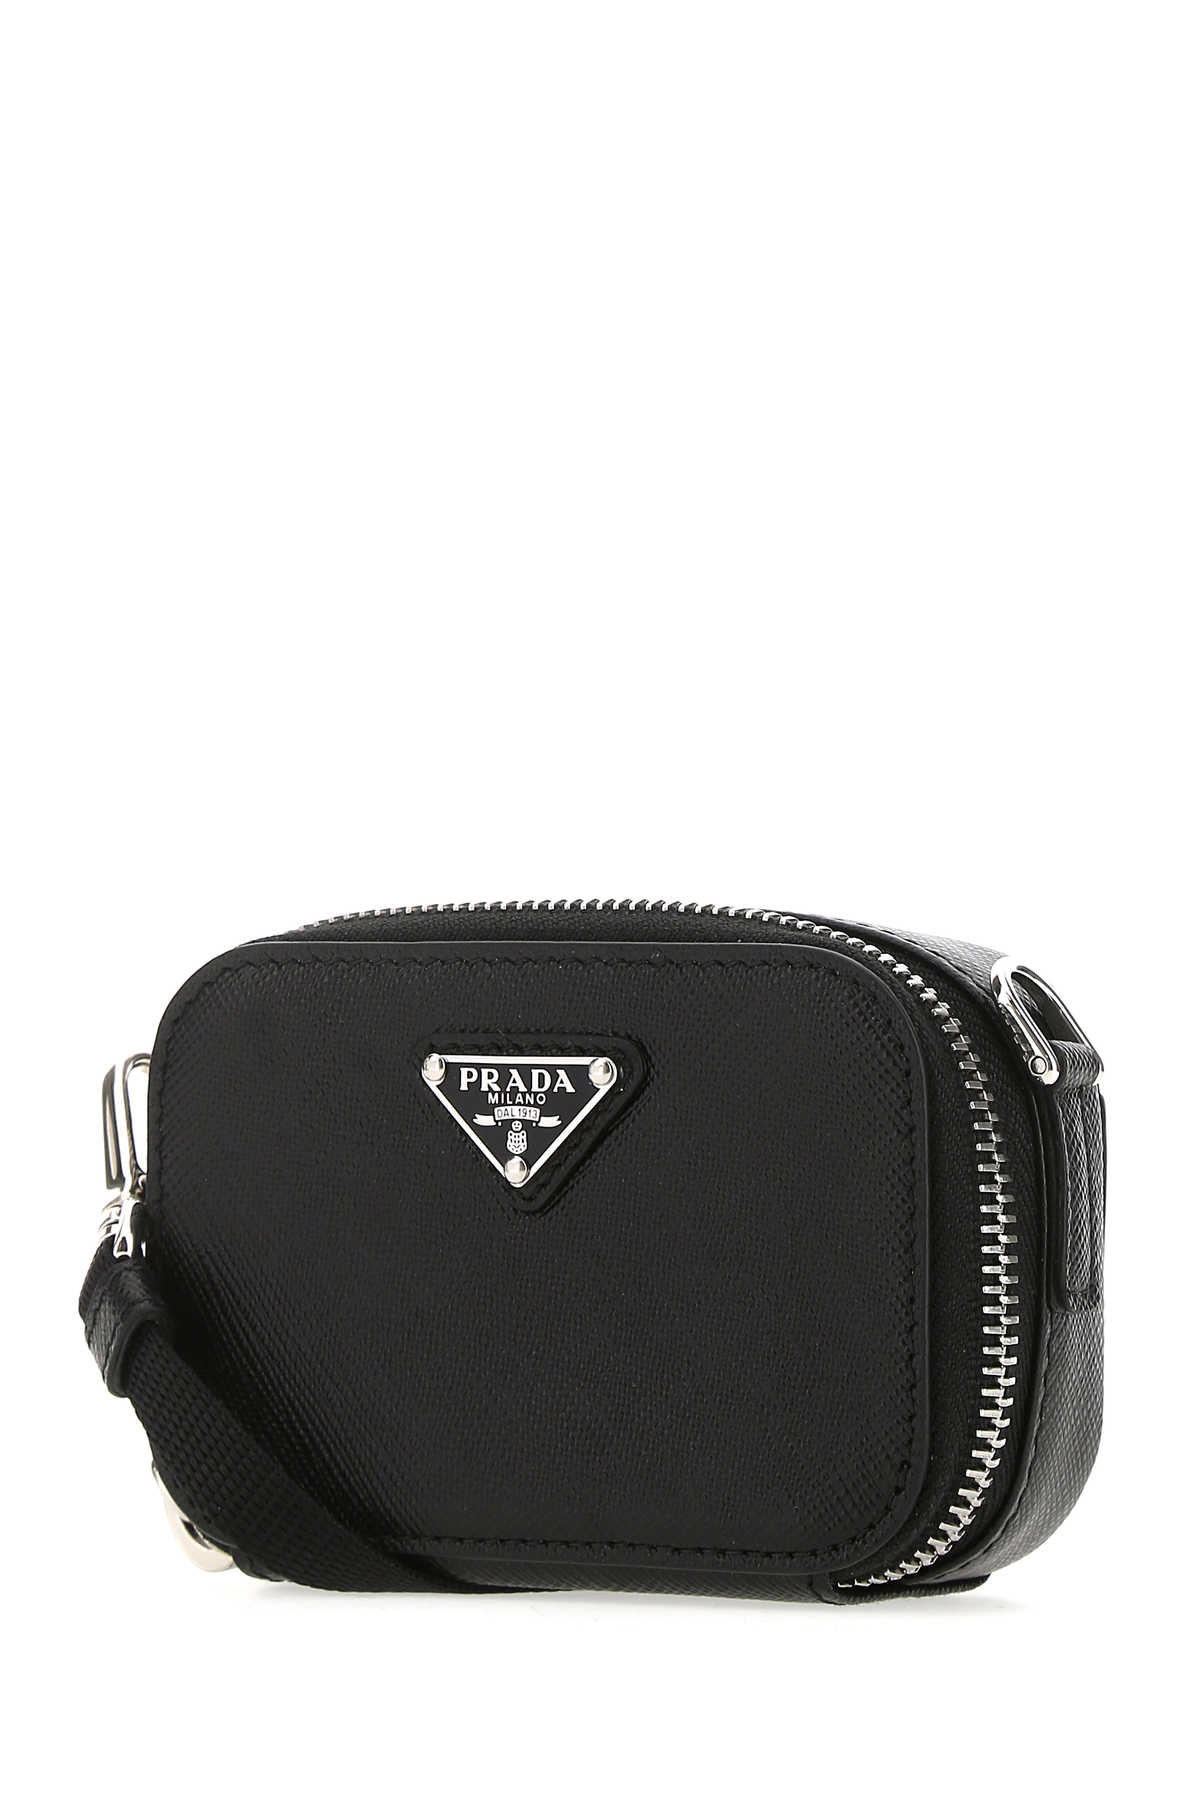 Prada Black Leather Crossbody Bag In F0002